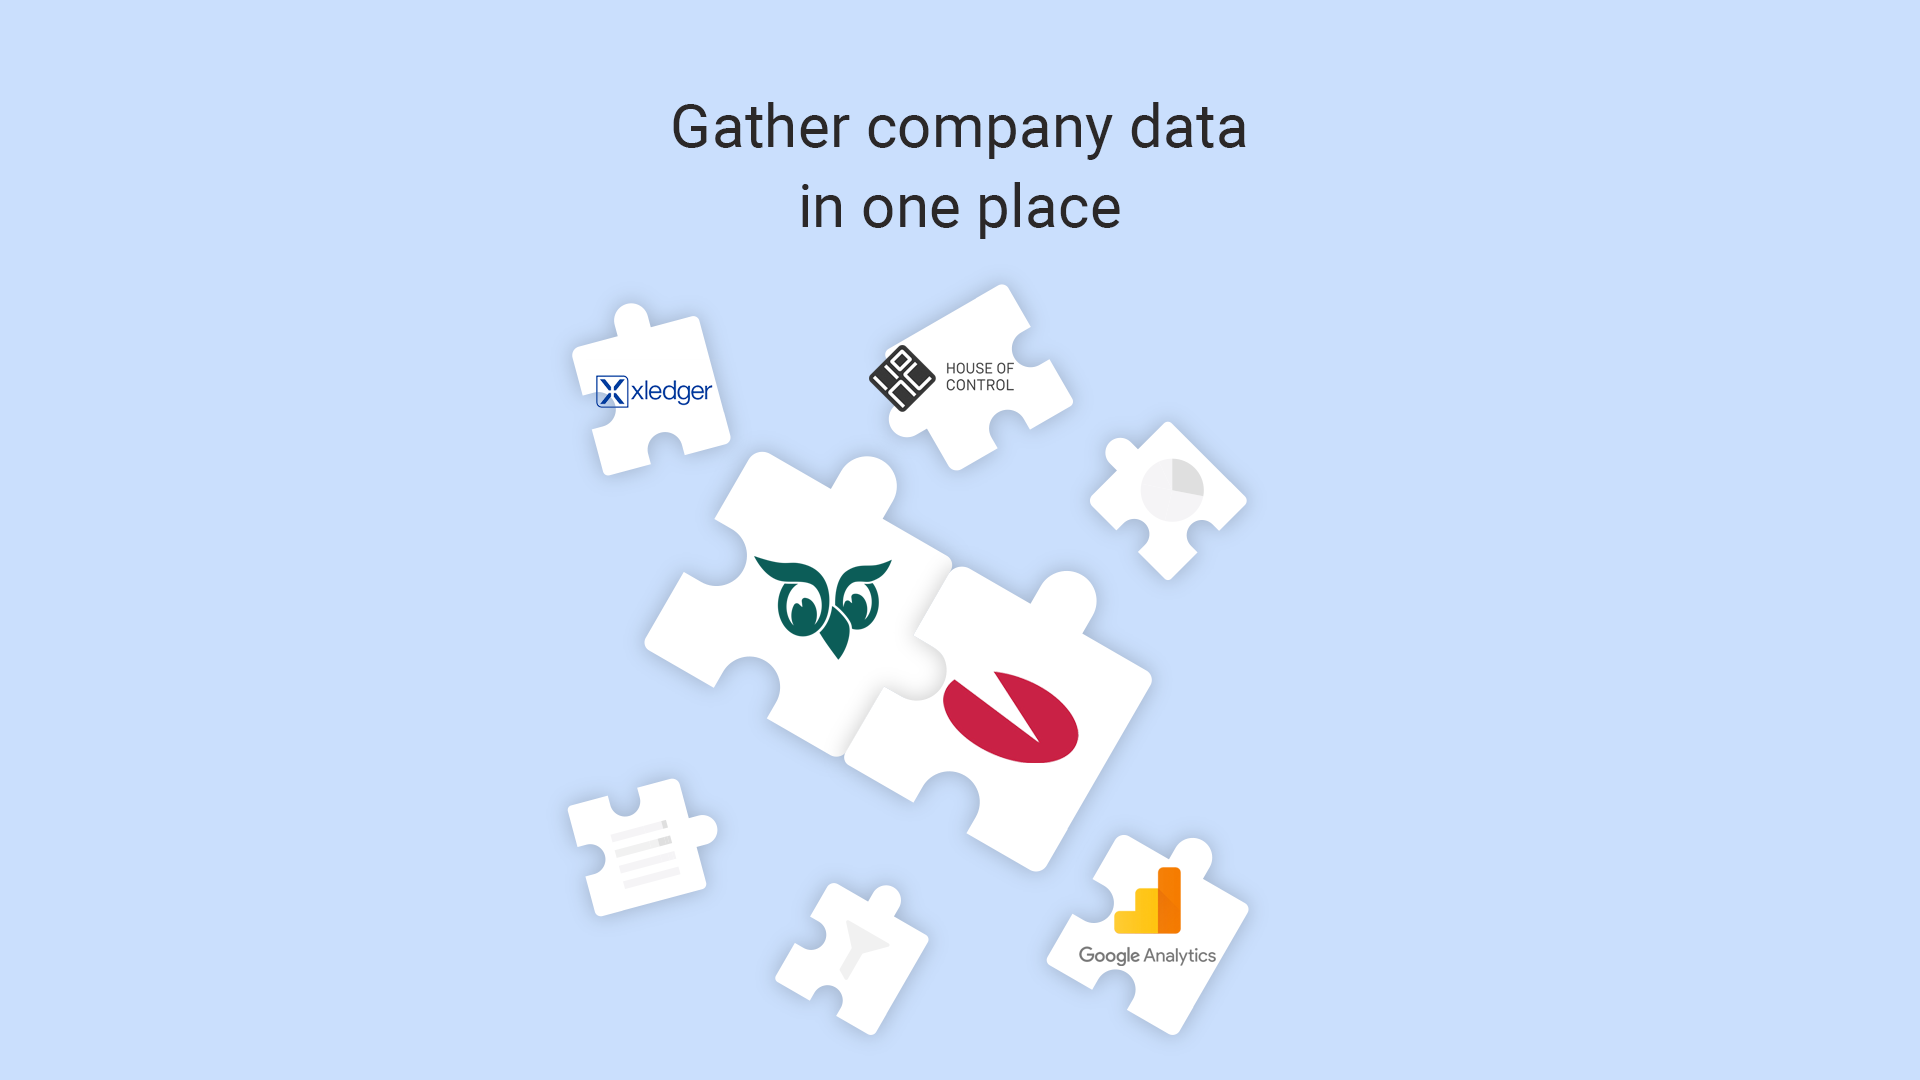 1. Gather company data.